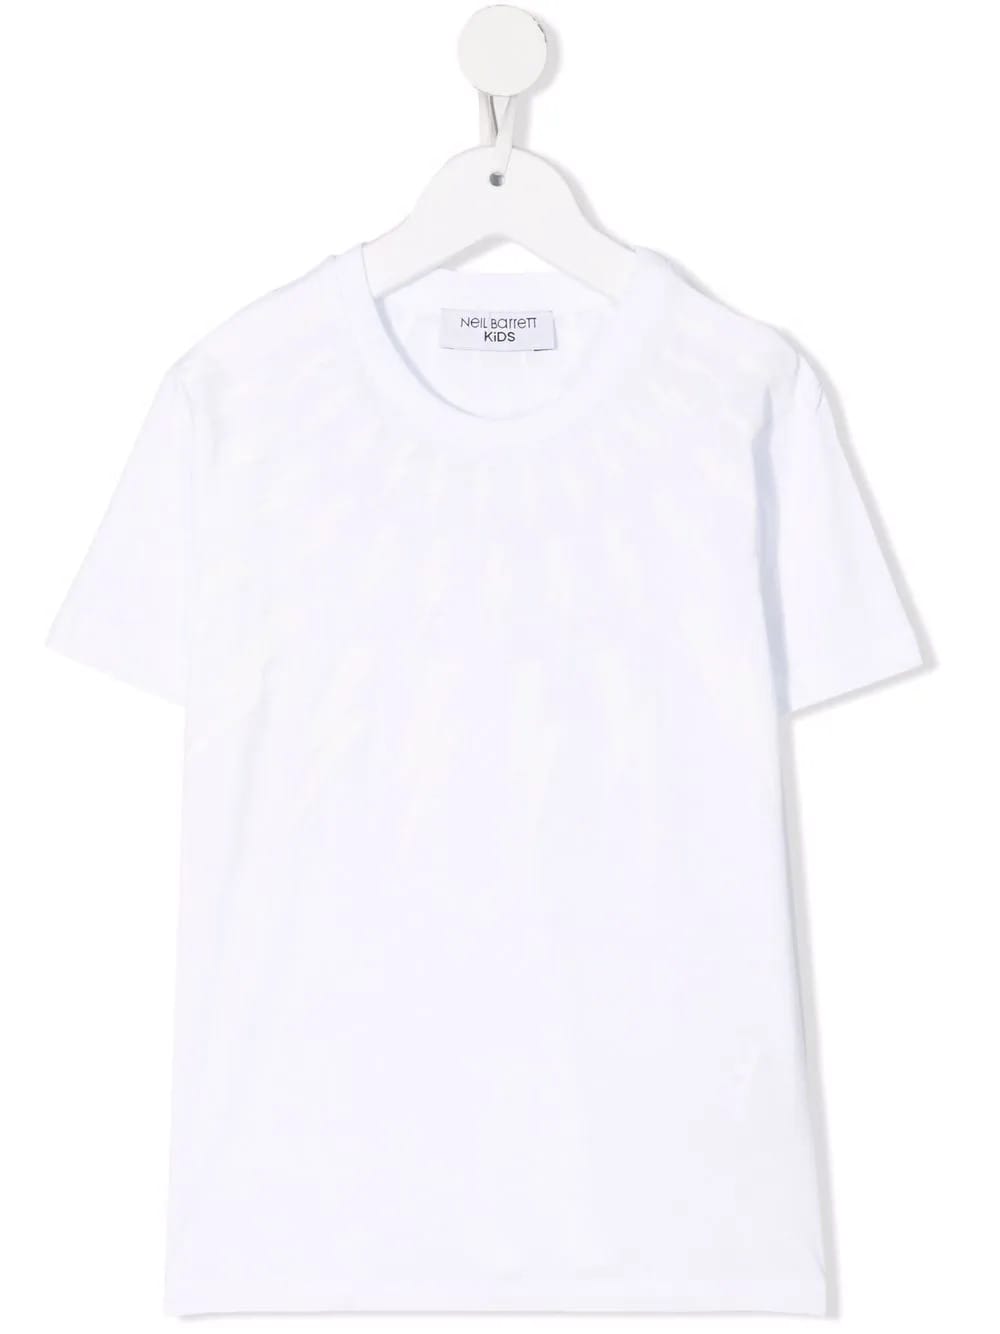 Neil Barrett Kids White T-shirt With Fluorescent Fair-isle Thunderbolt Print